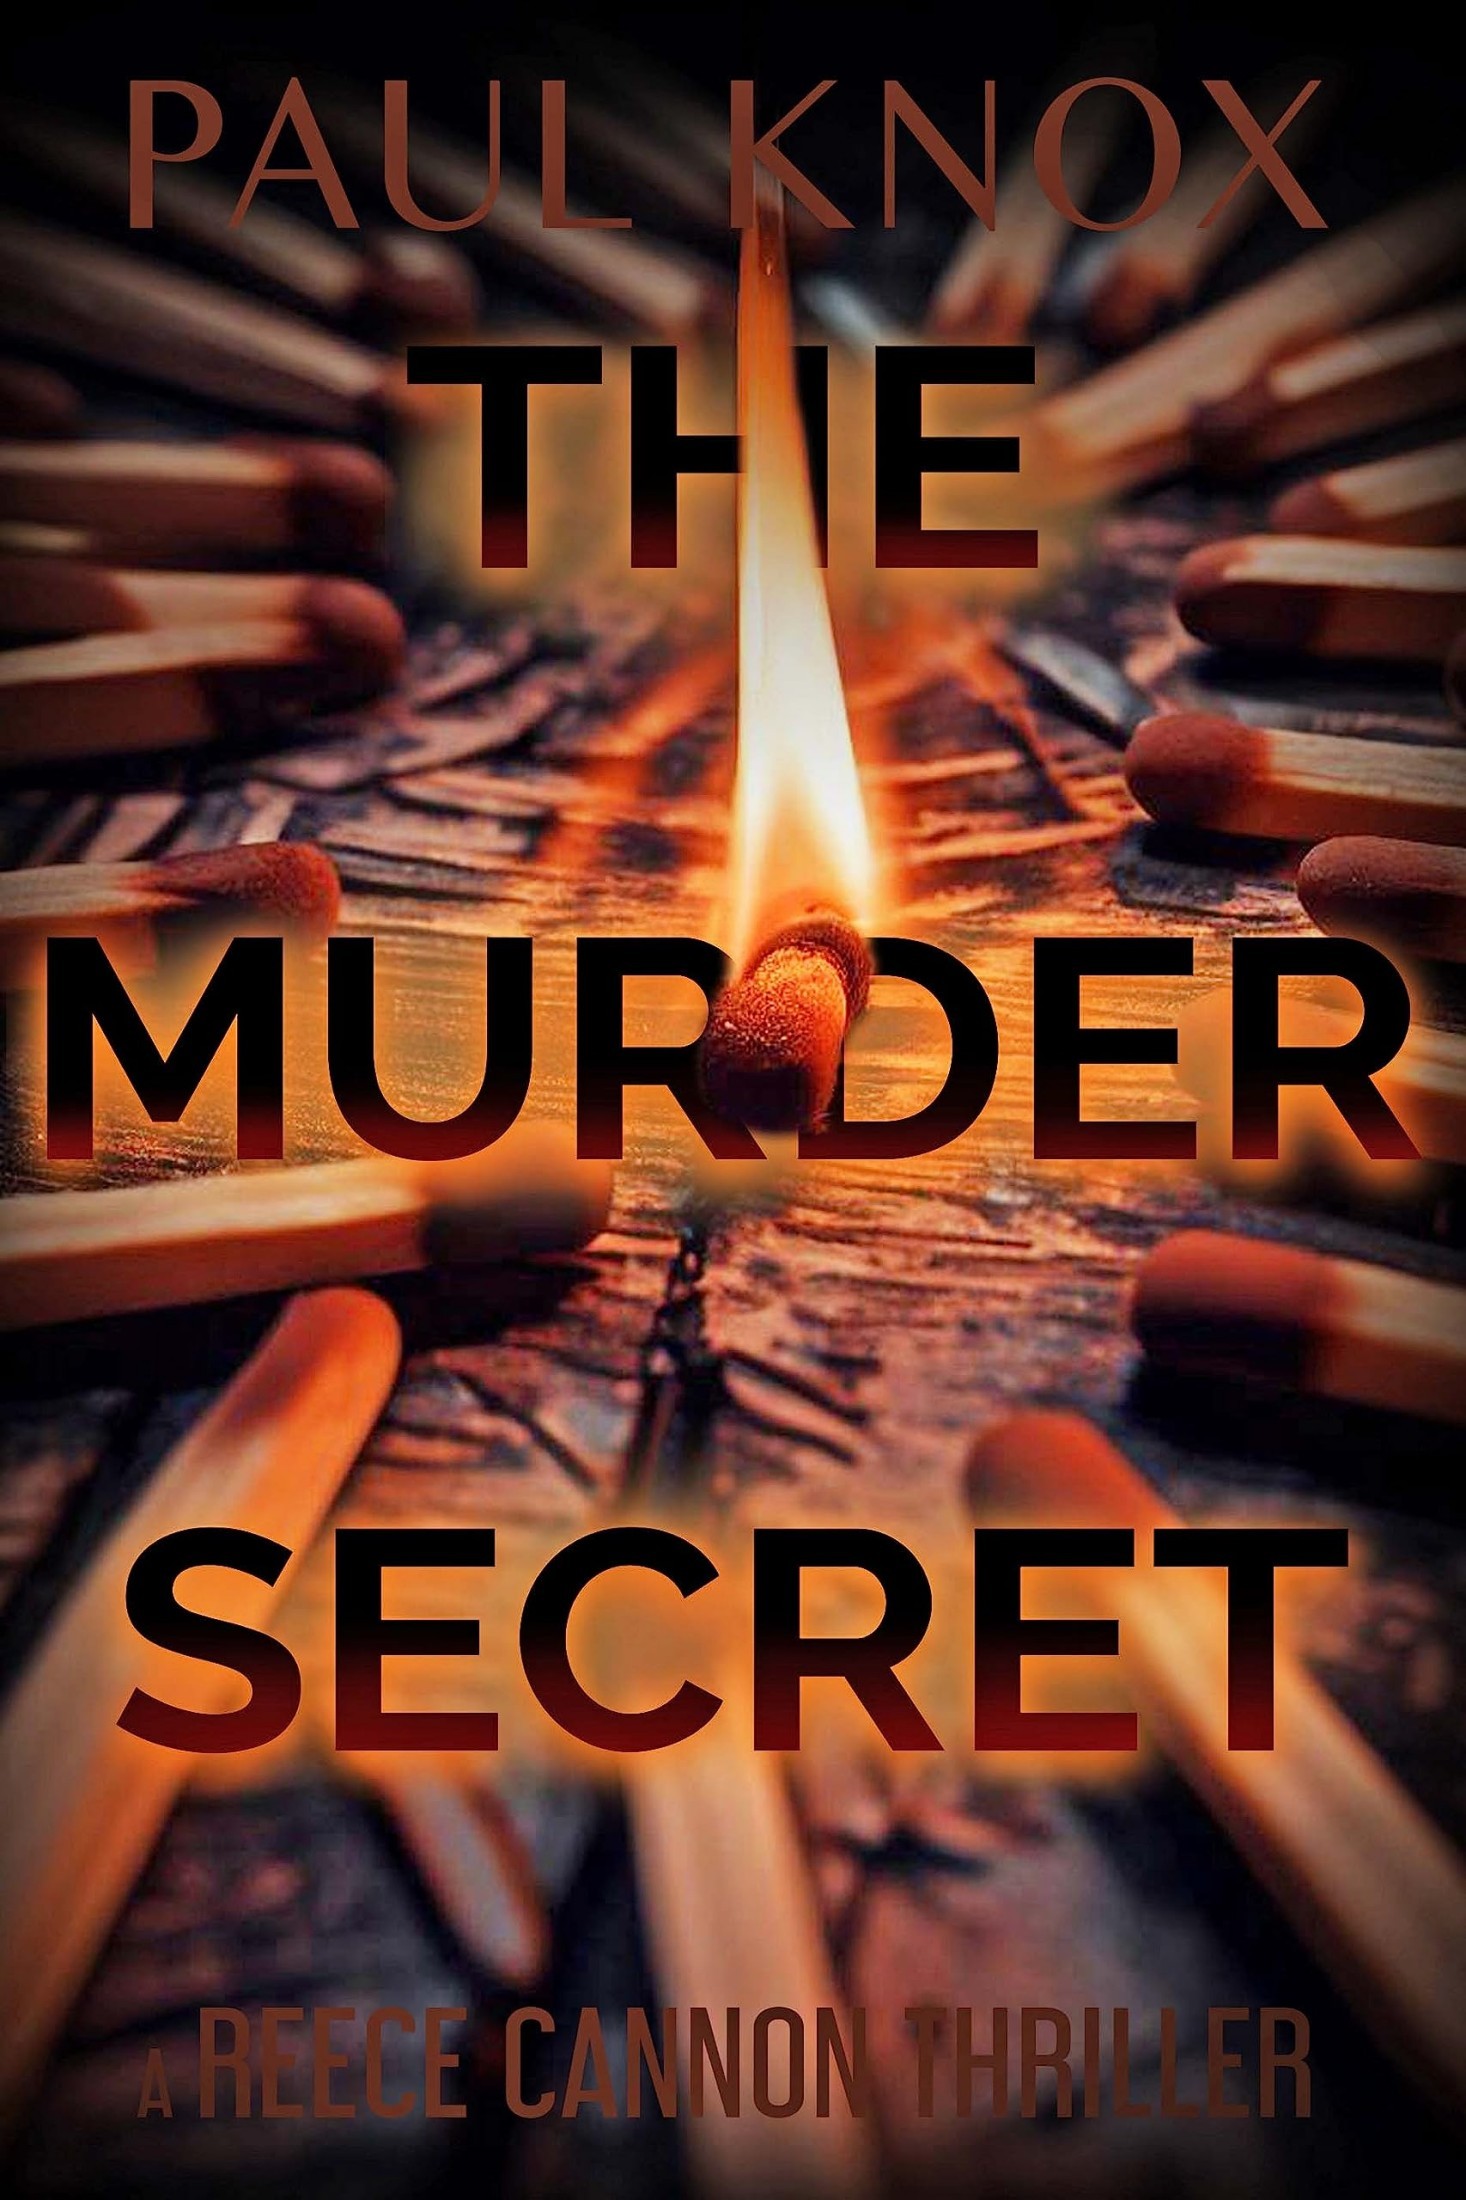 The Murder Secret